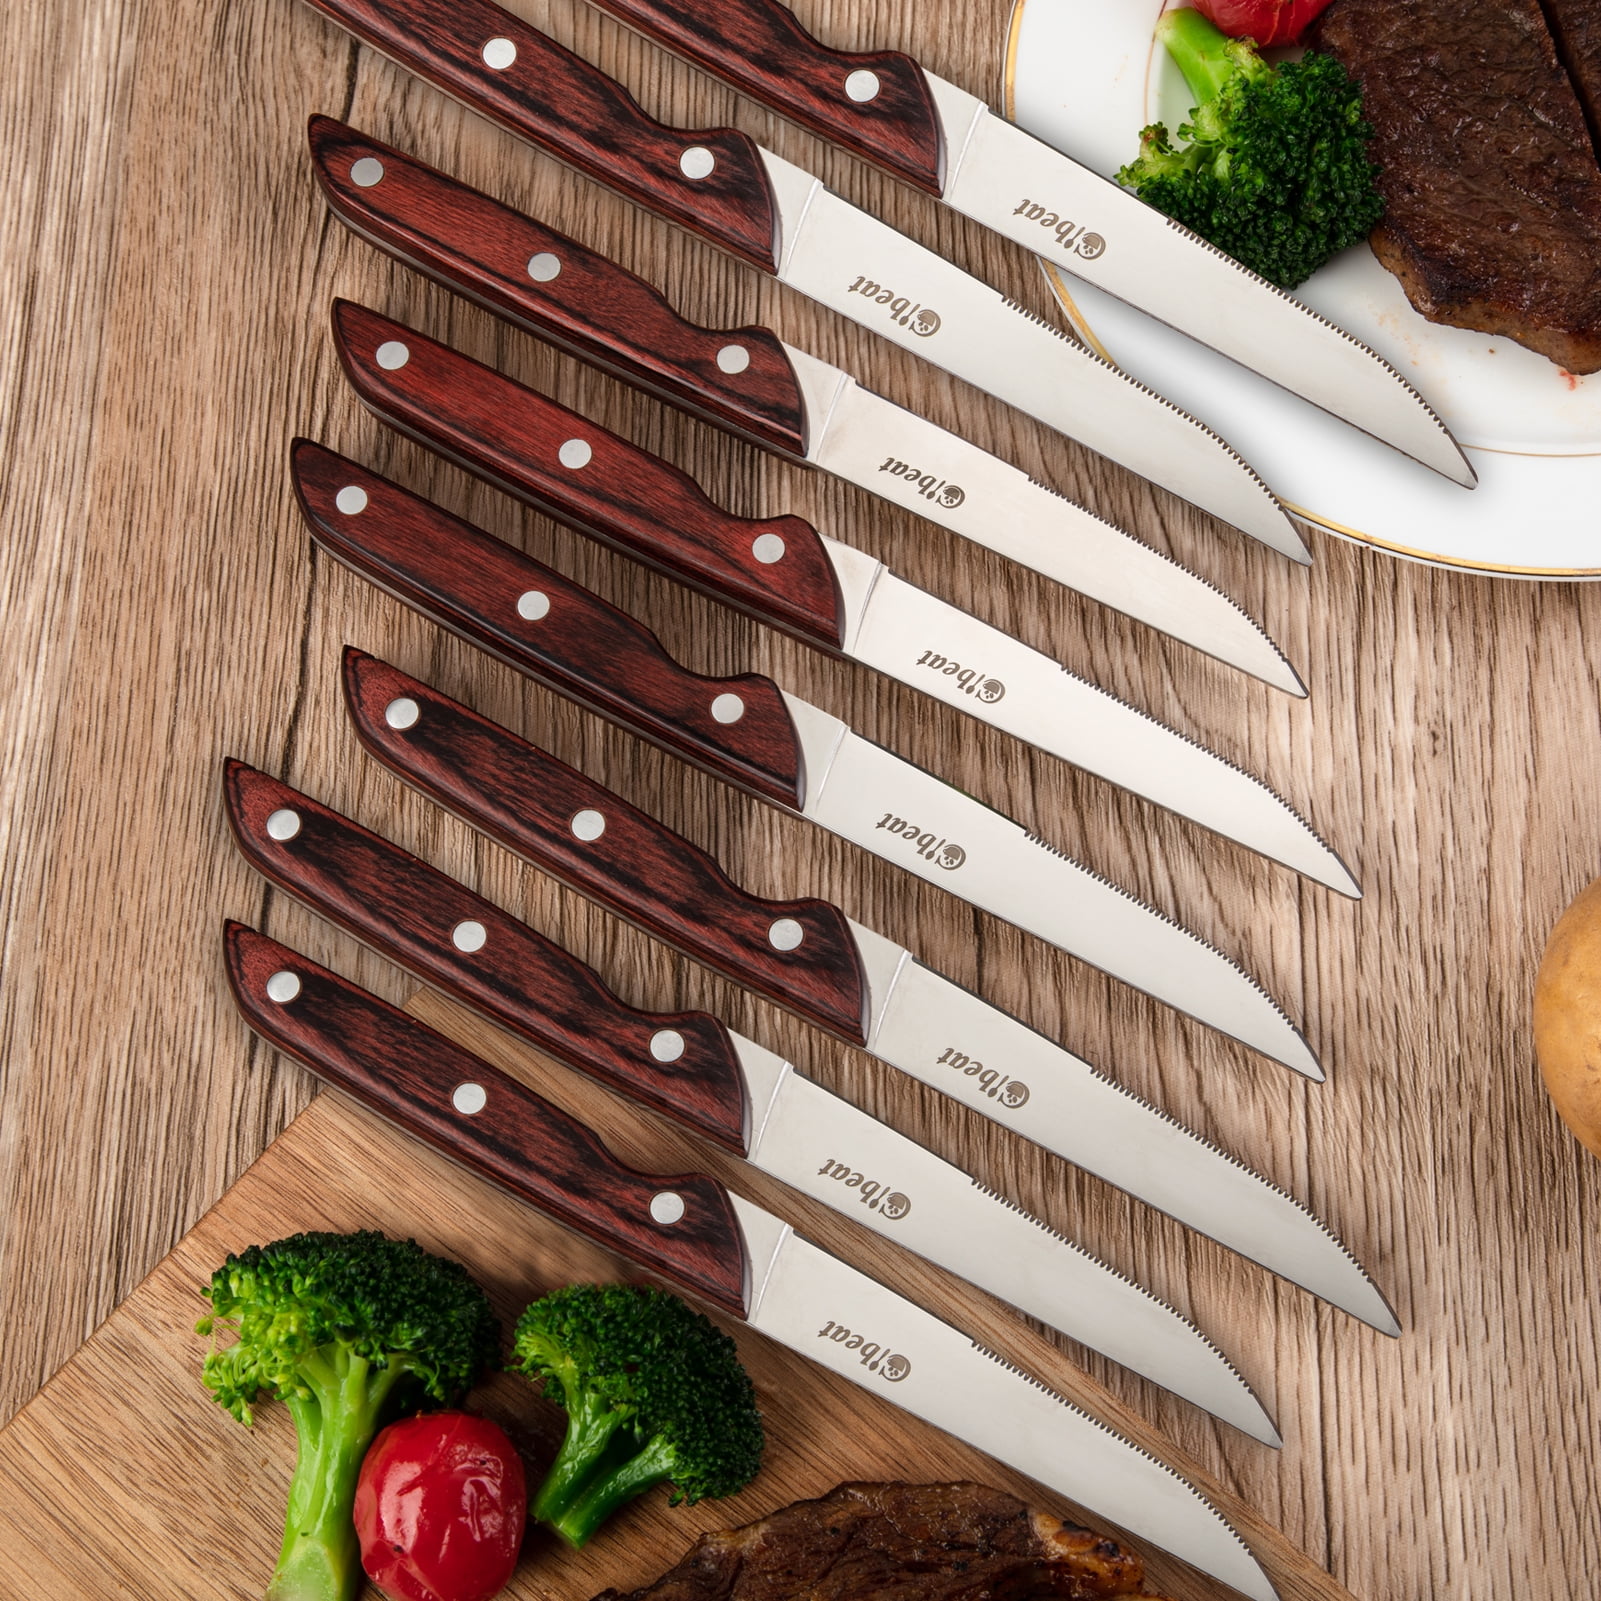  BECOKAY Steak Knives, Steak Knives Set of 8, German Steel  Serrated Steak Knife, Dinner Steak Knives, Ultra Sharp Steak Knives Set  with Ergonomically Designed Soft Touch Handle (Black): Home & Kitchen